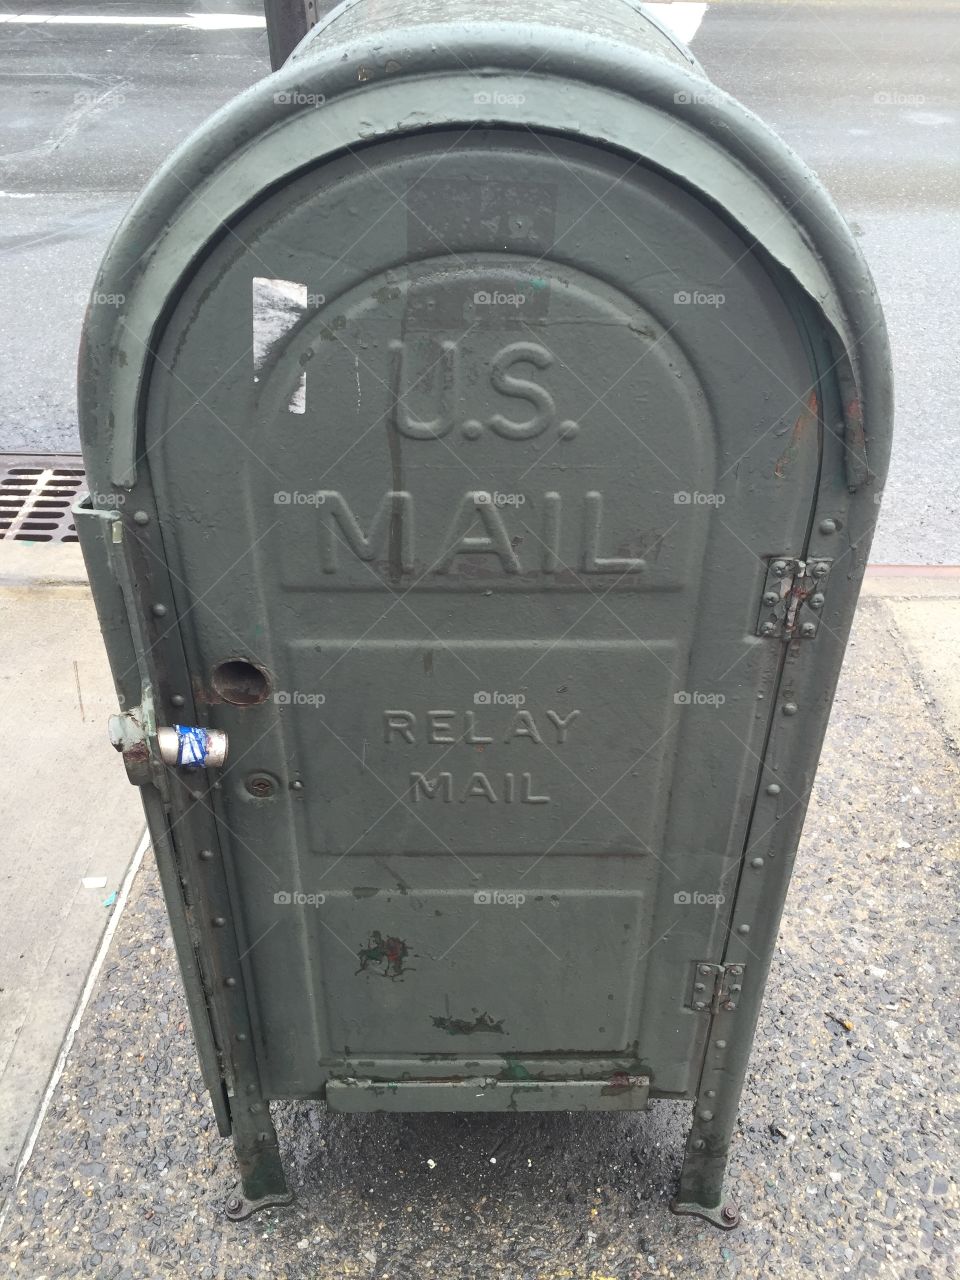 Mail 